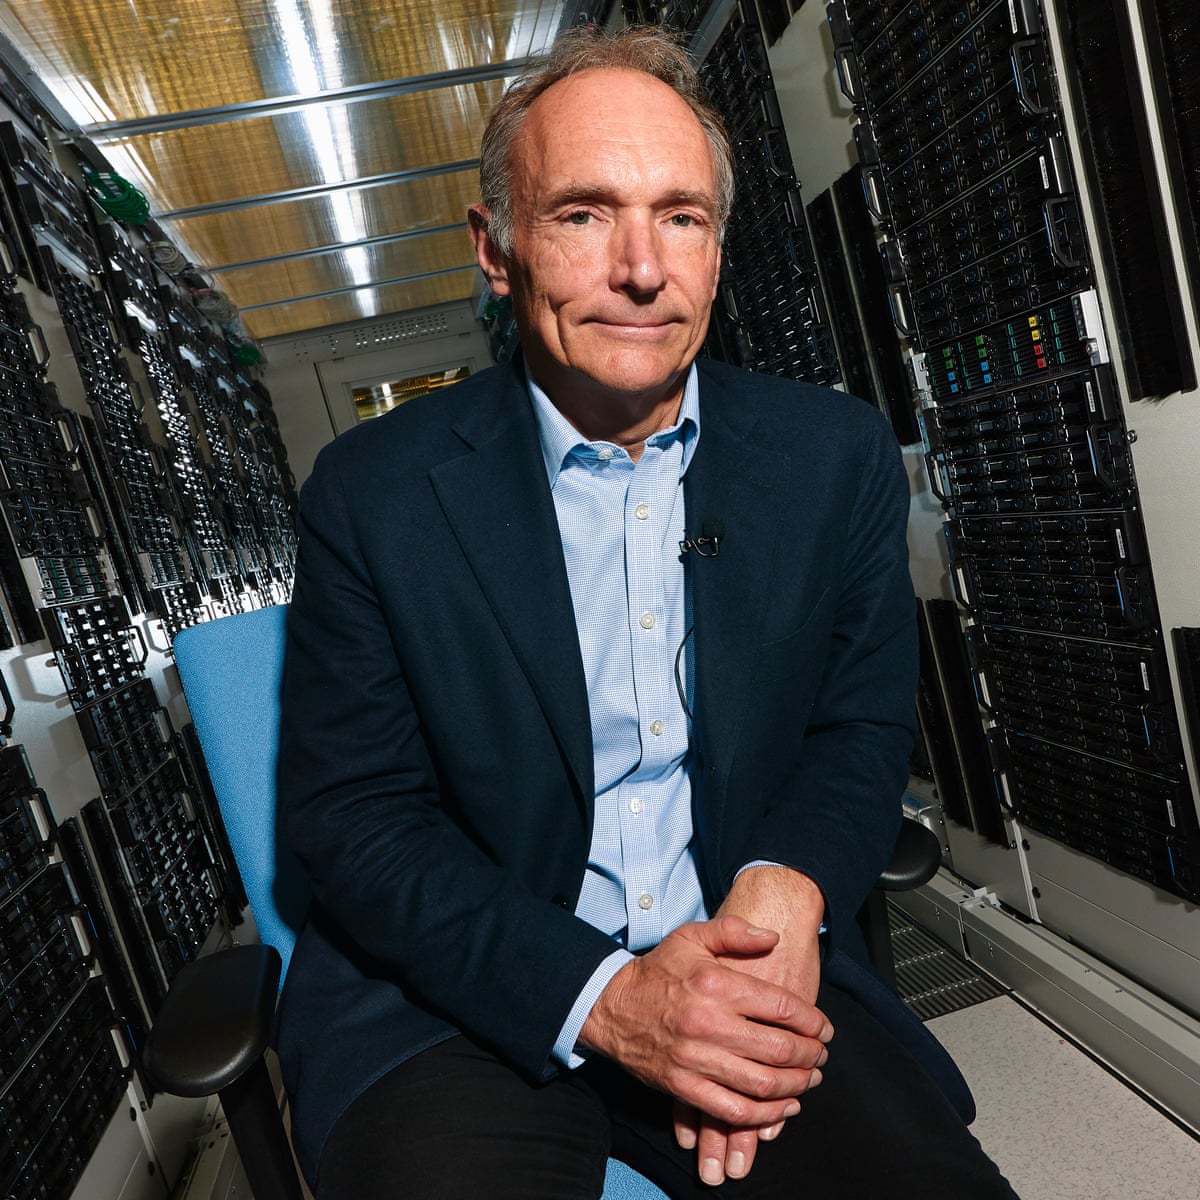 Tim Berners-Lee: 'We need social networks where bad things happen less' |  Tim Berners-Lee | The Guardian